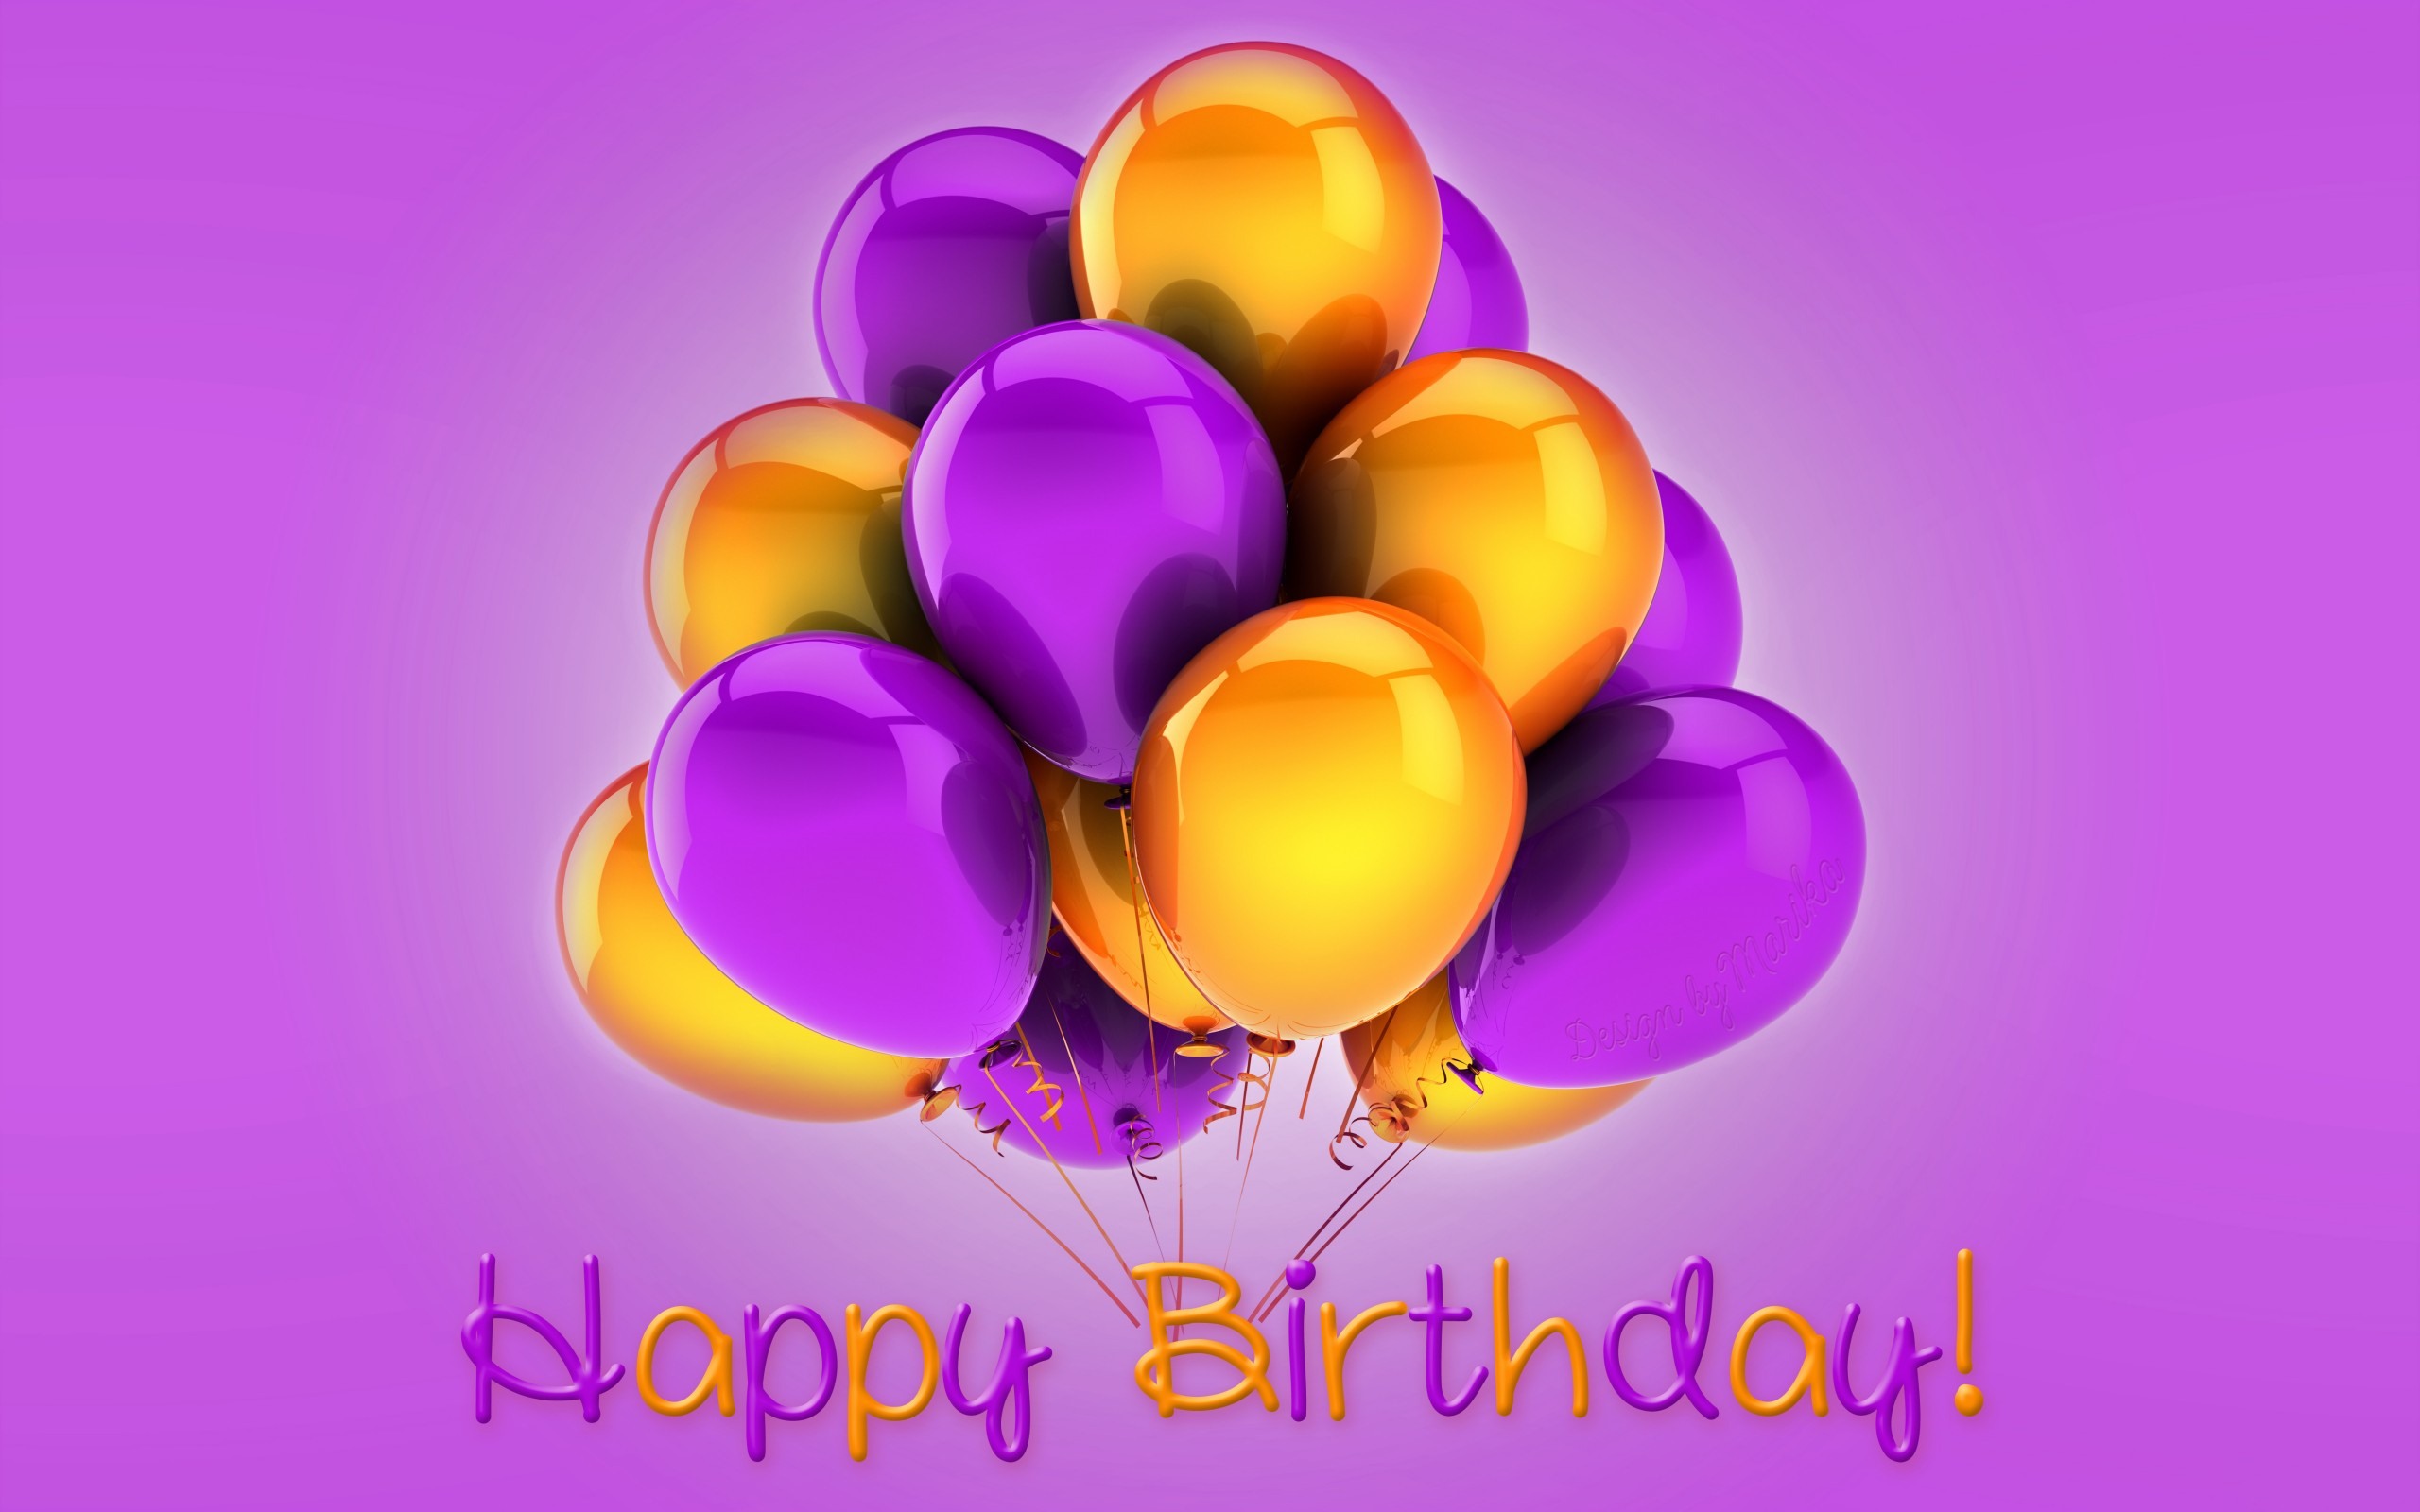 Happy-BirtHDay-Purple-Yellow-Balloons-Images.jpg